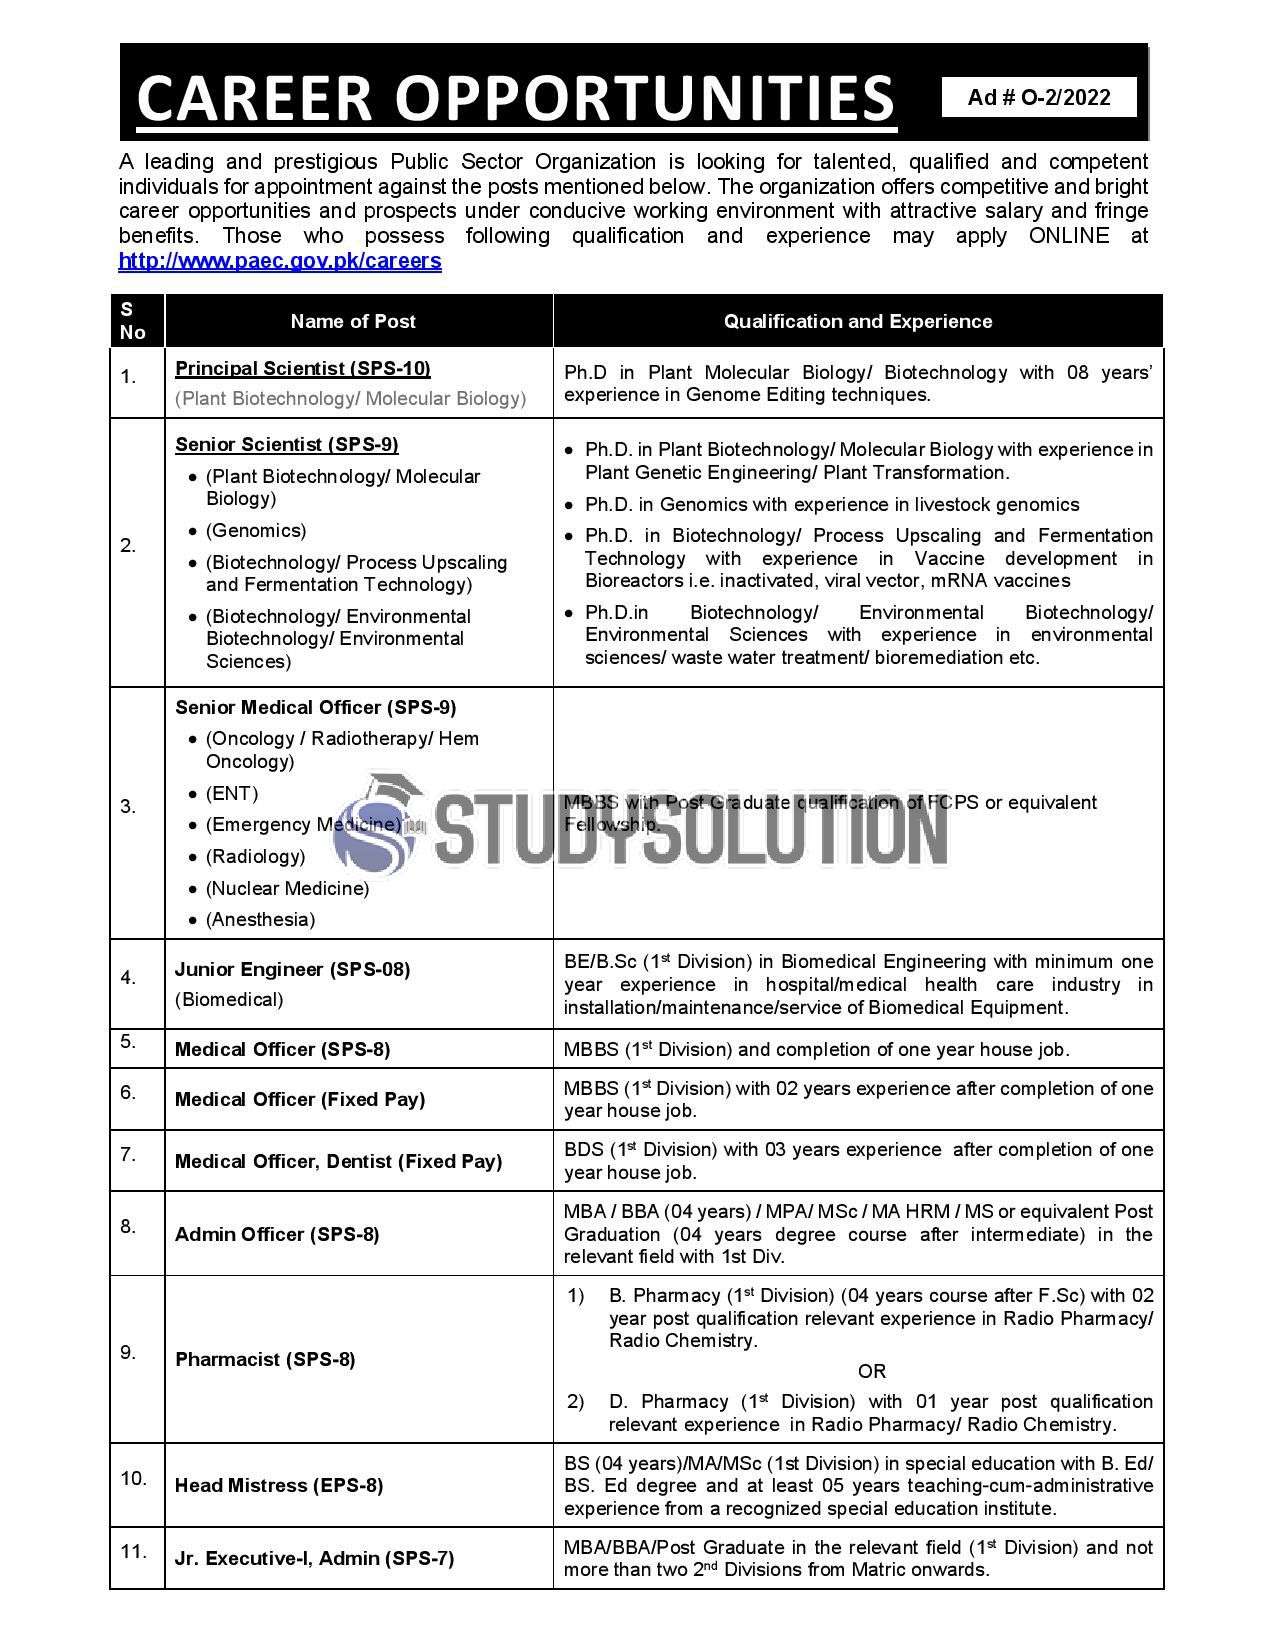 Pakistan Atomic Energy Commission PAEC Jobs 2022 Apply Online